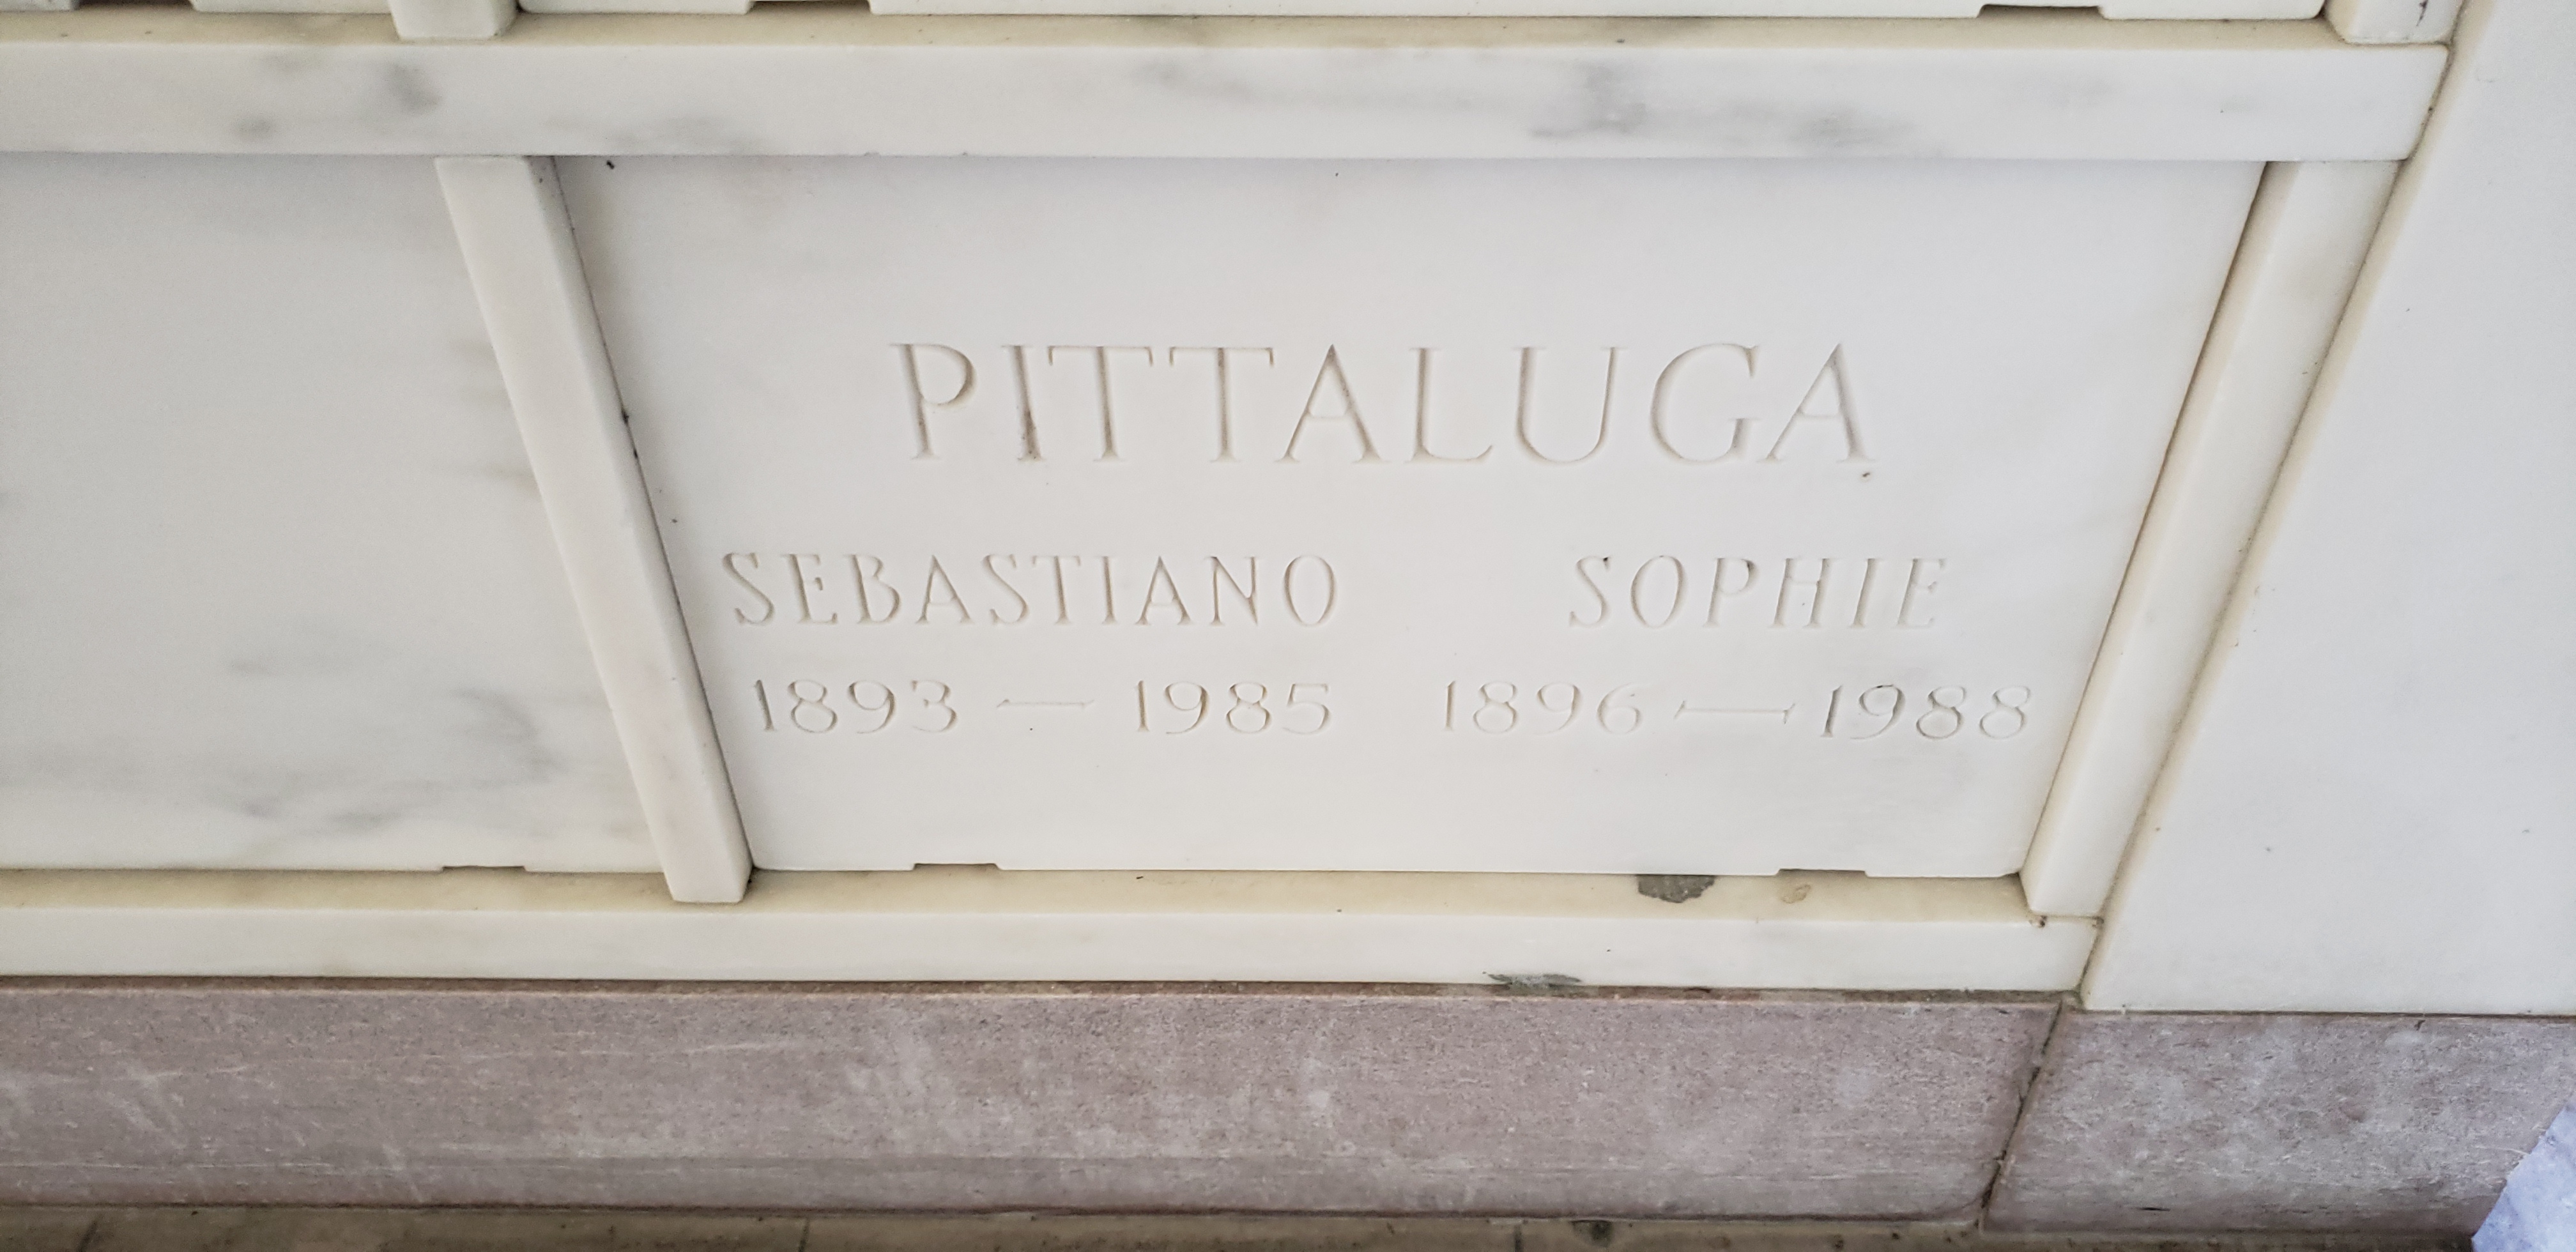 Sebastiano Pittaluga